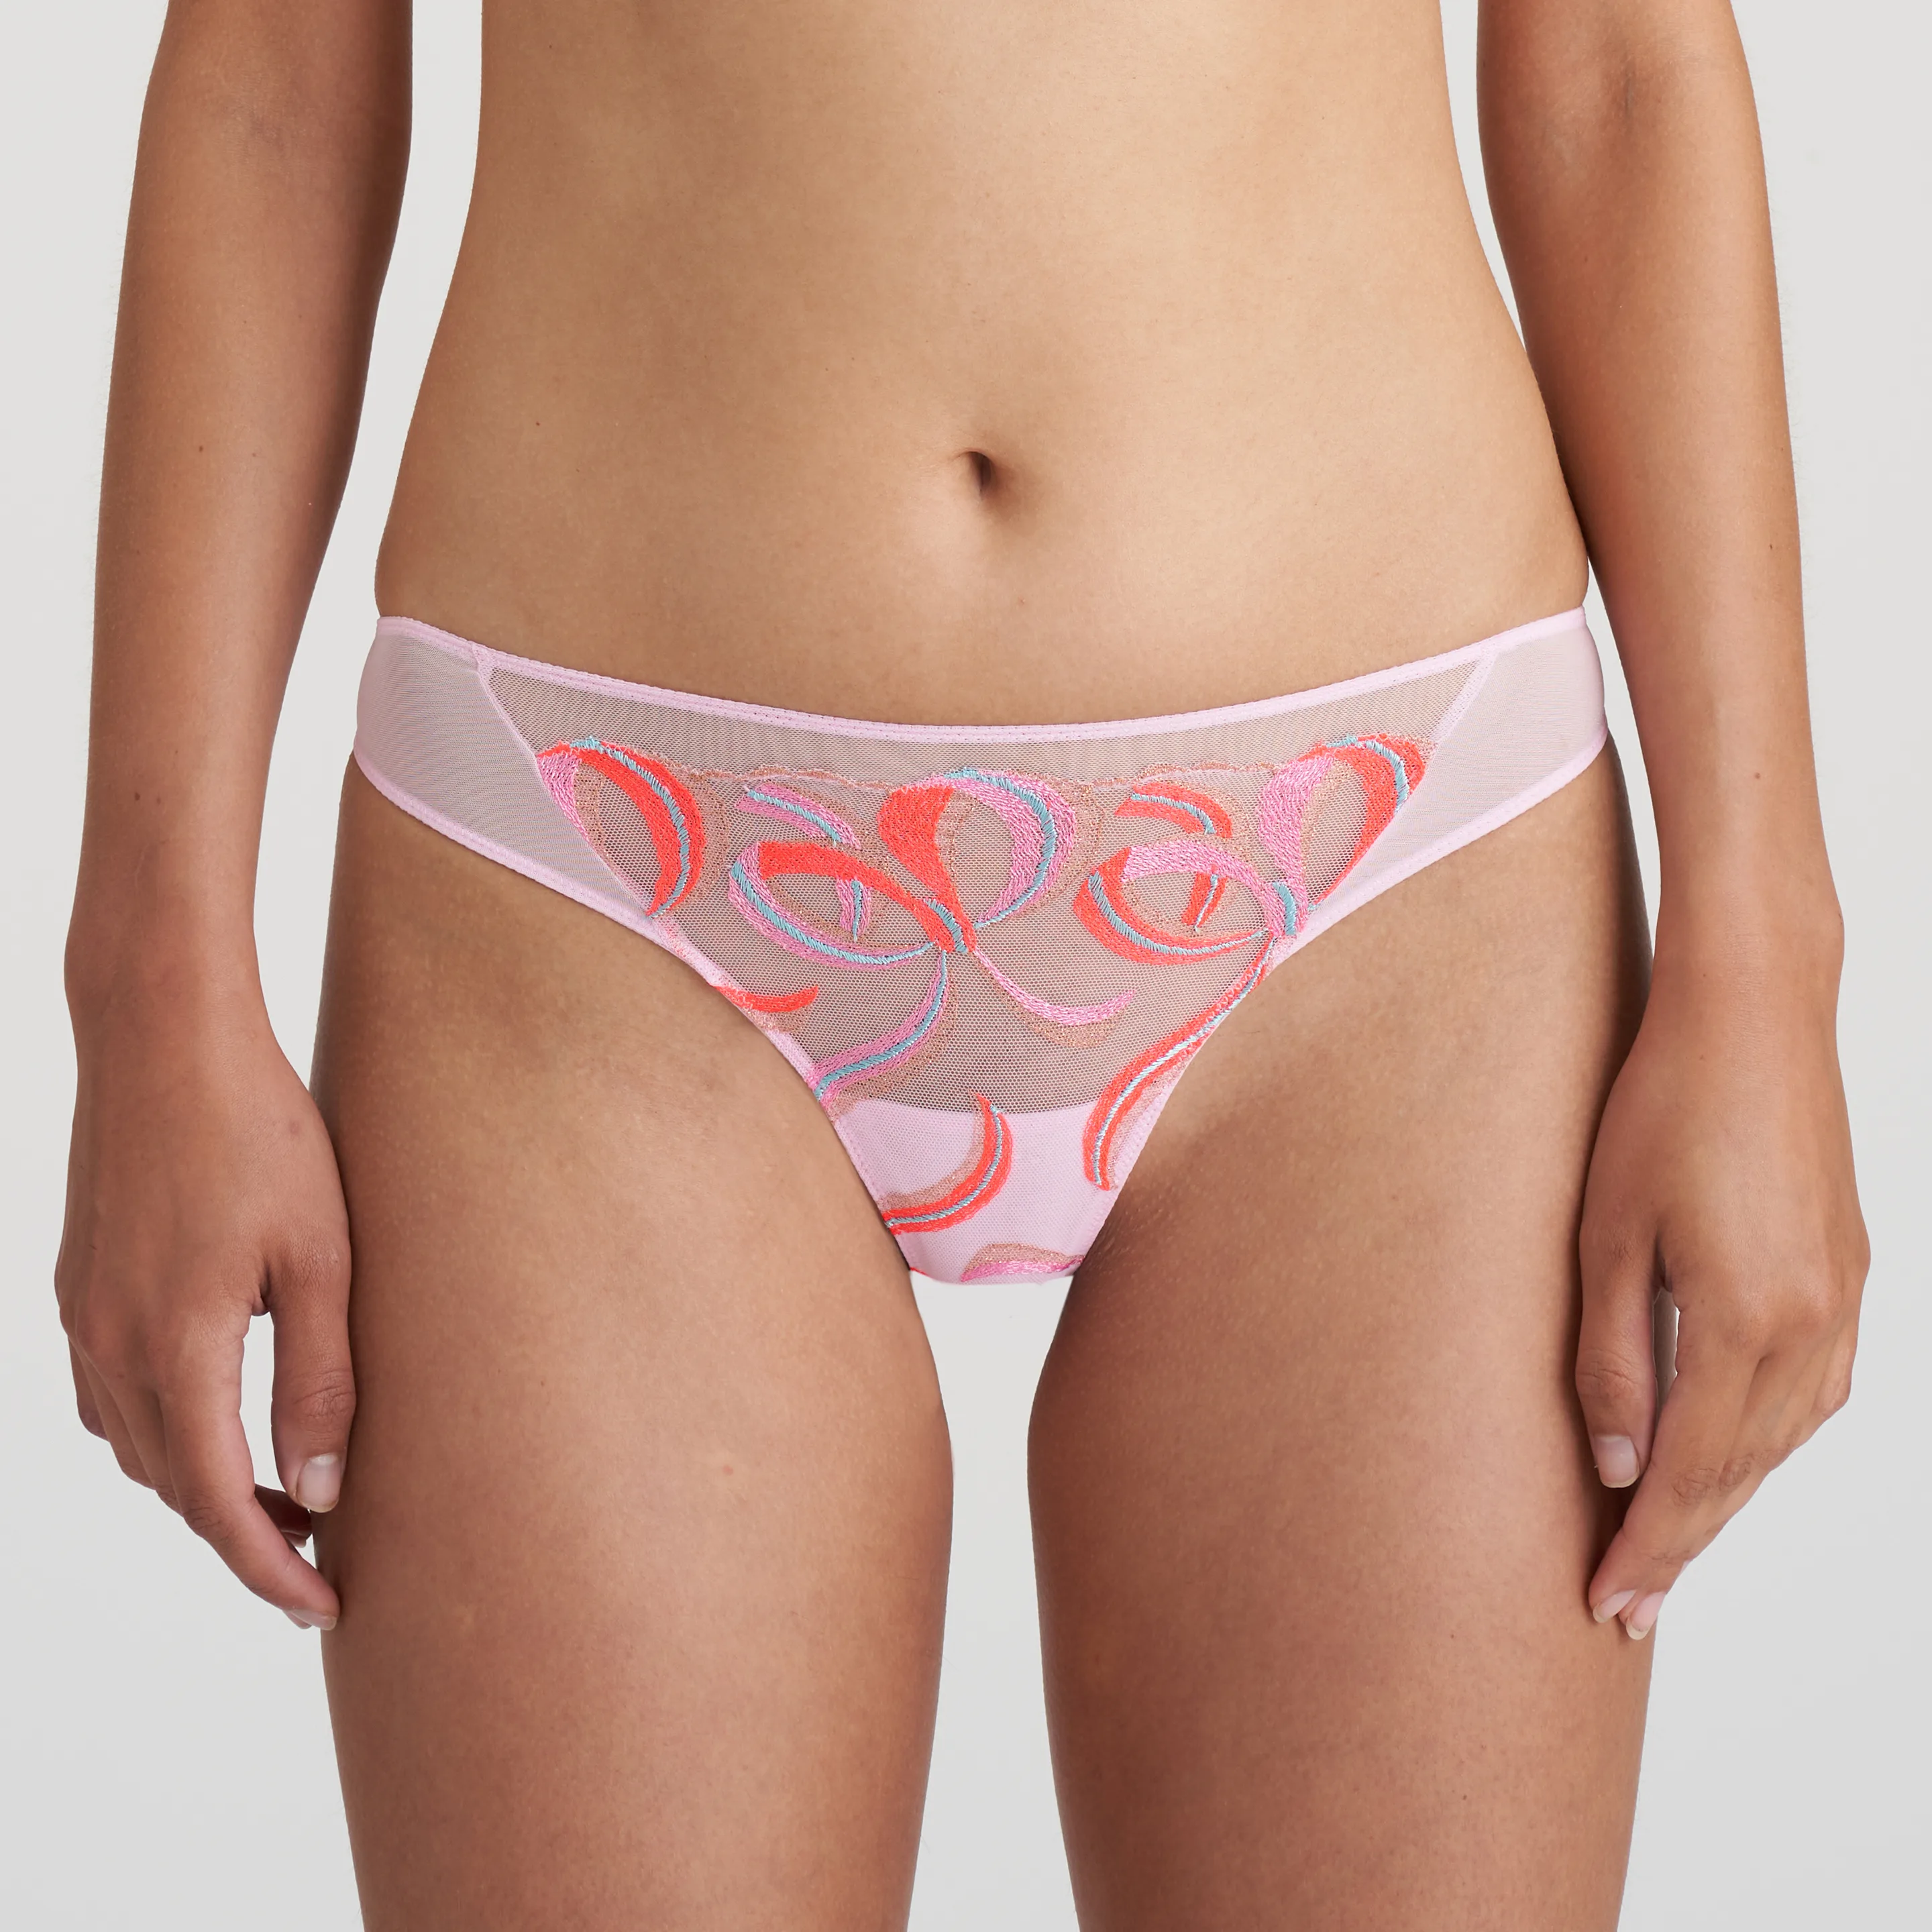 Shop Thongs for Panties Online